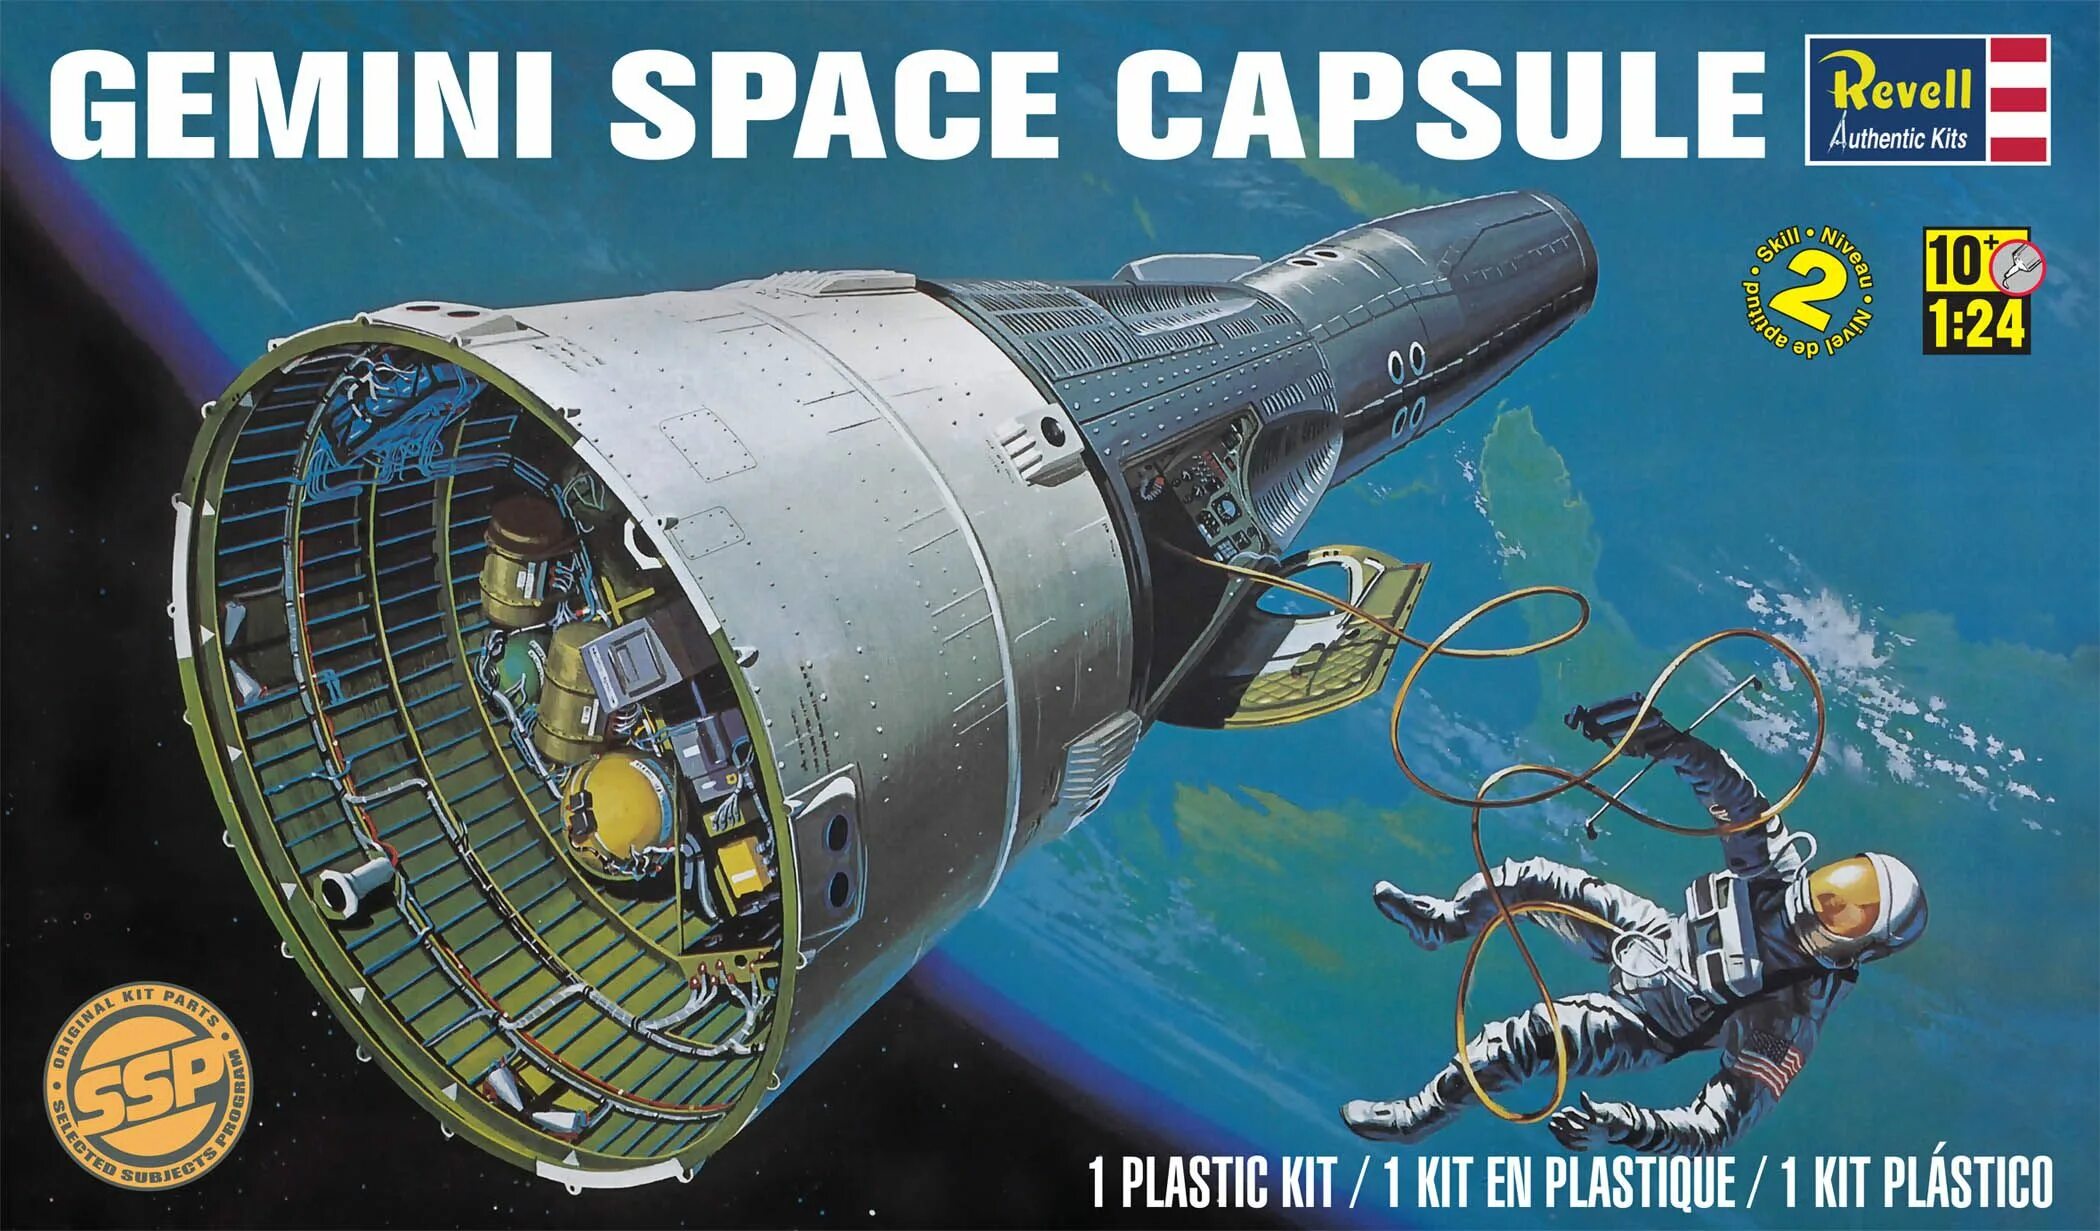 12 апр 23. Revell Gemini Space Capsule. Джемини (Космическая программа). Капсула Джемини. Gemini Space Capsule.